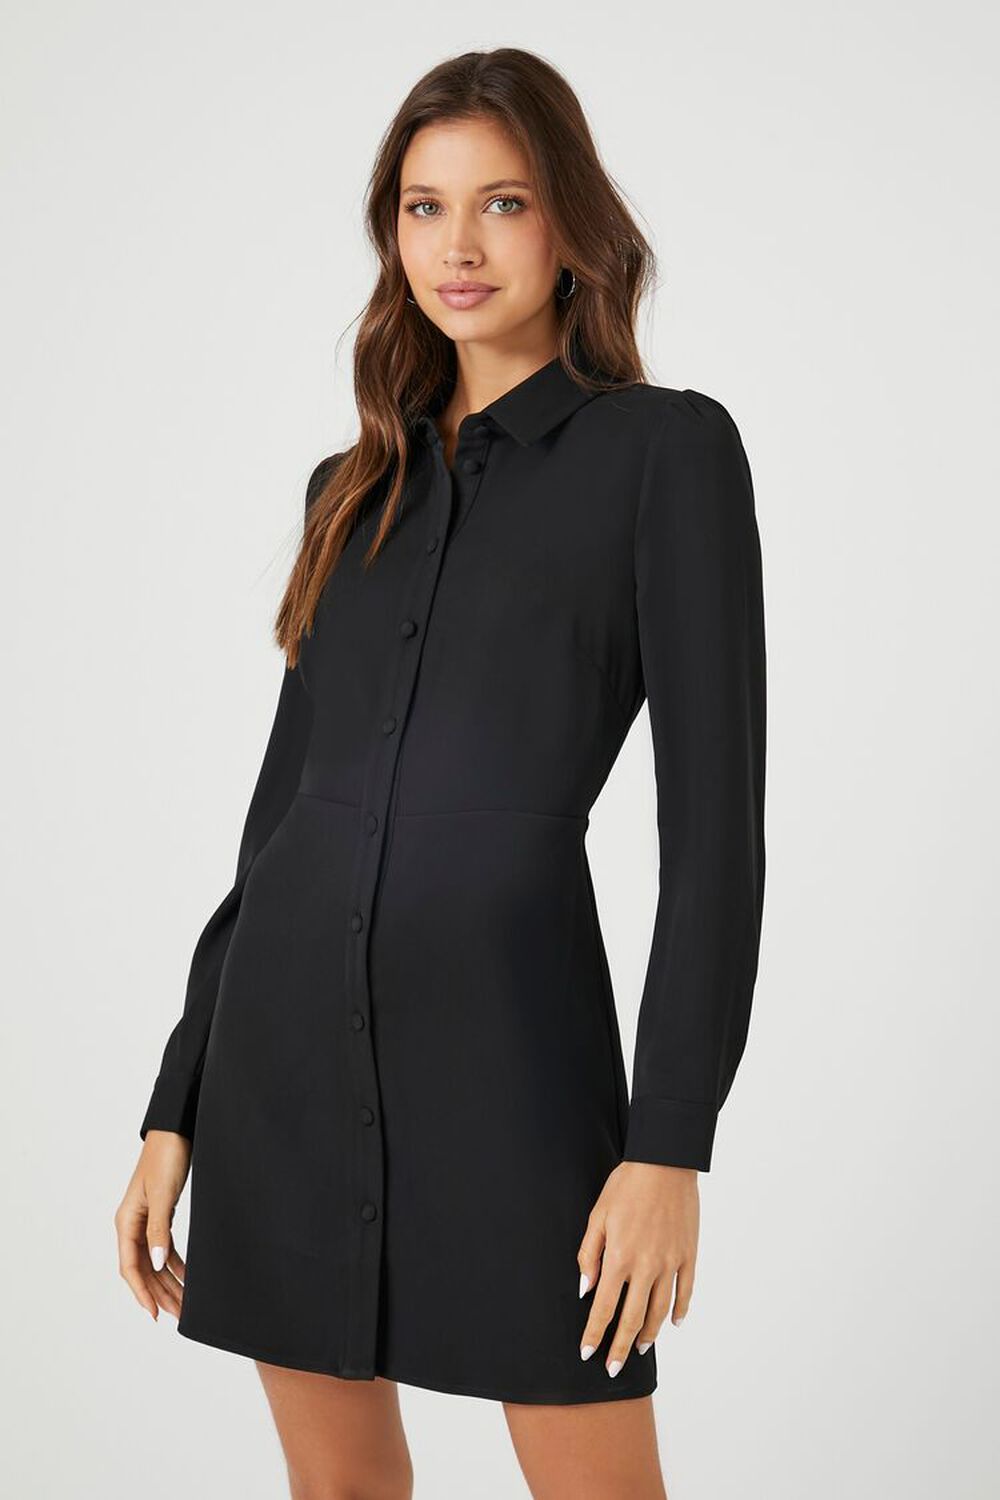 BLACK Collared Button-Front Mini Dress, image 1